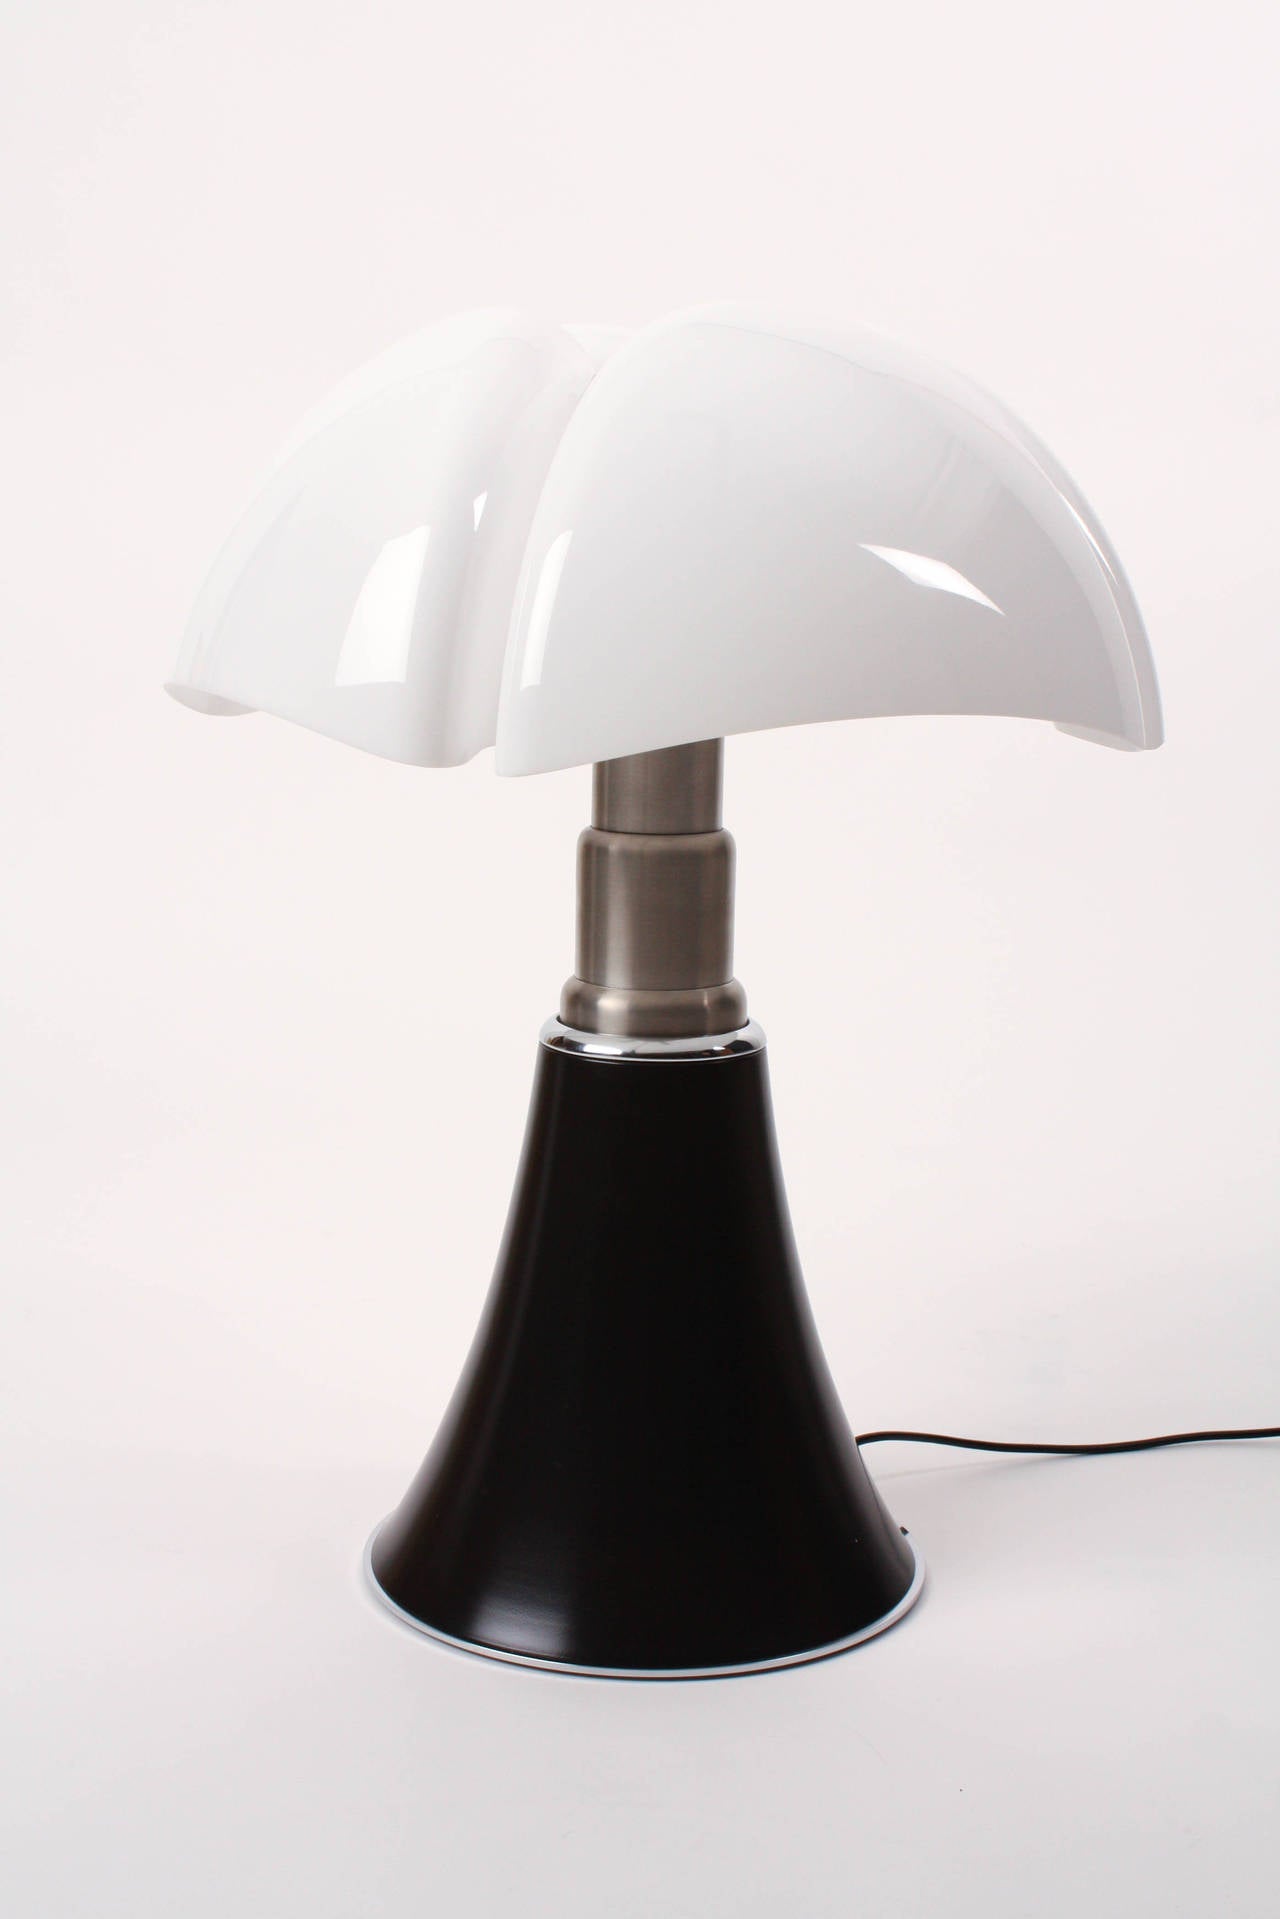 Acrylic Pipistrello Lamp, Gae Aulenti